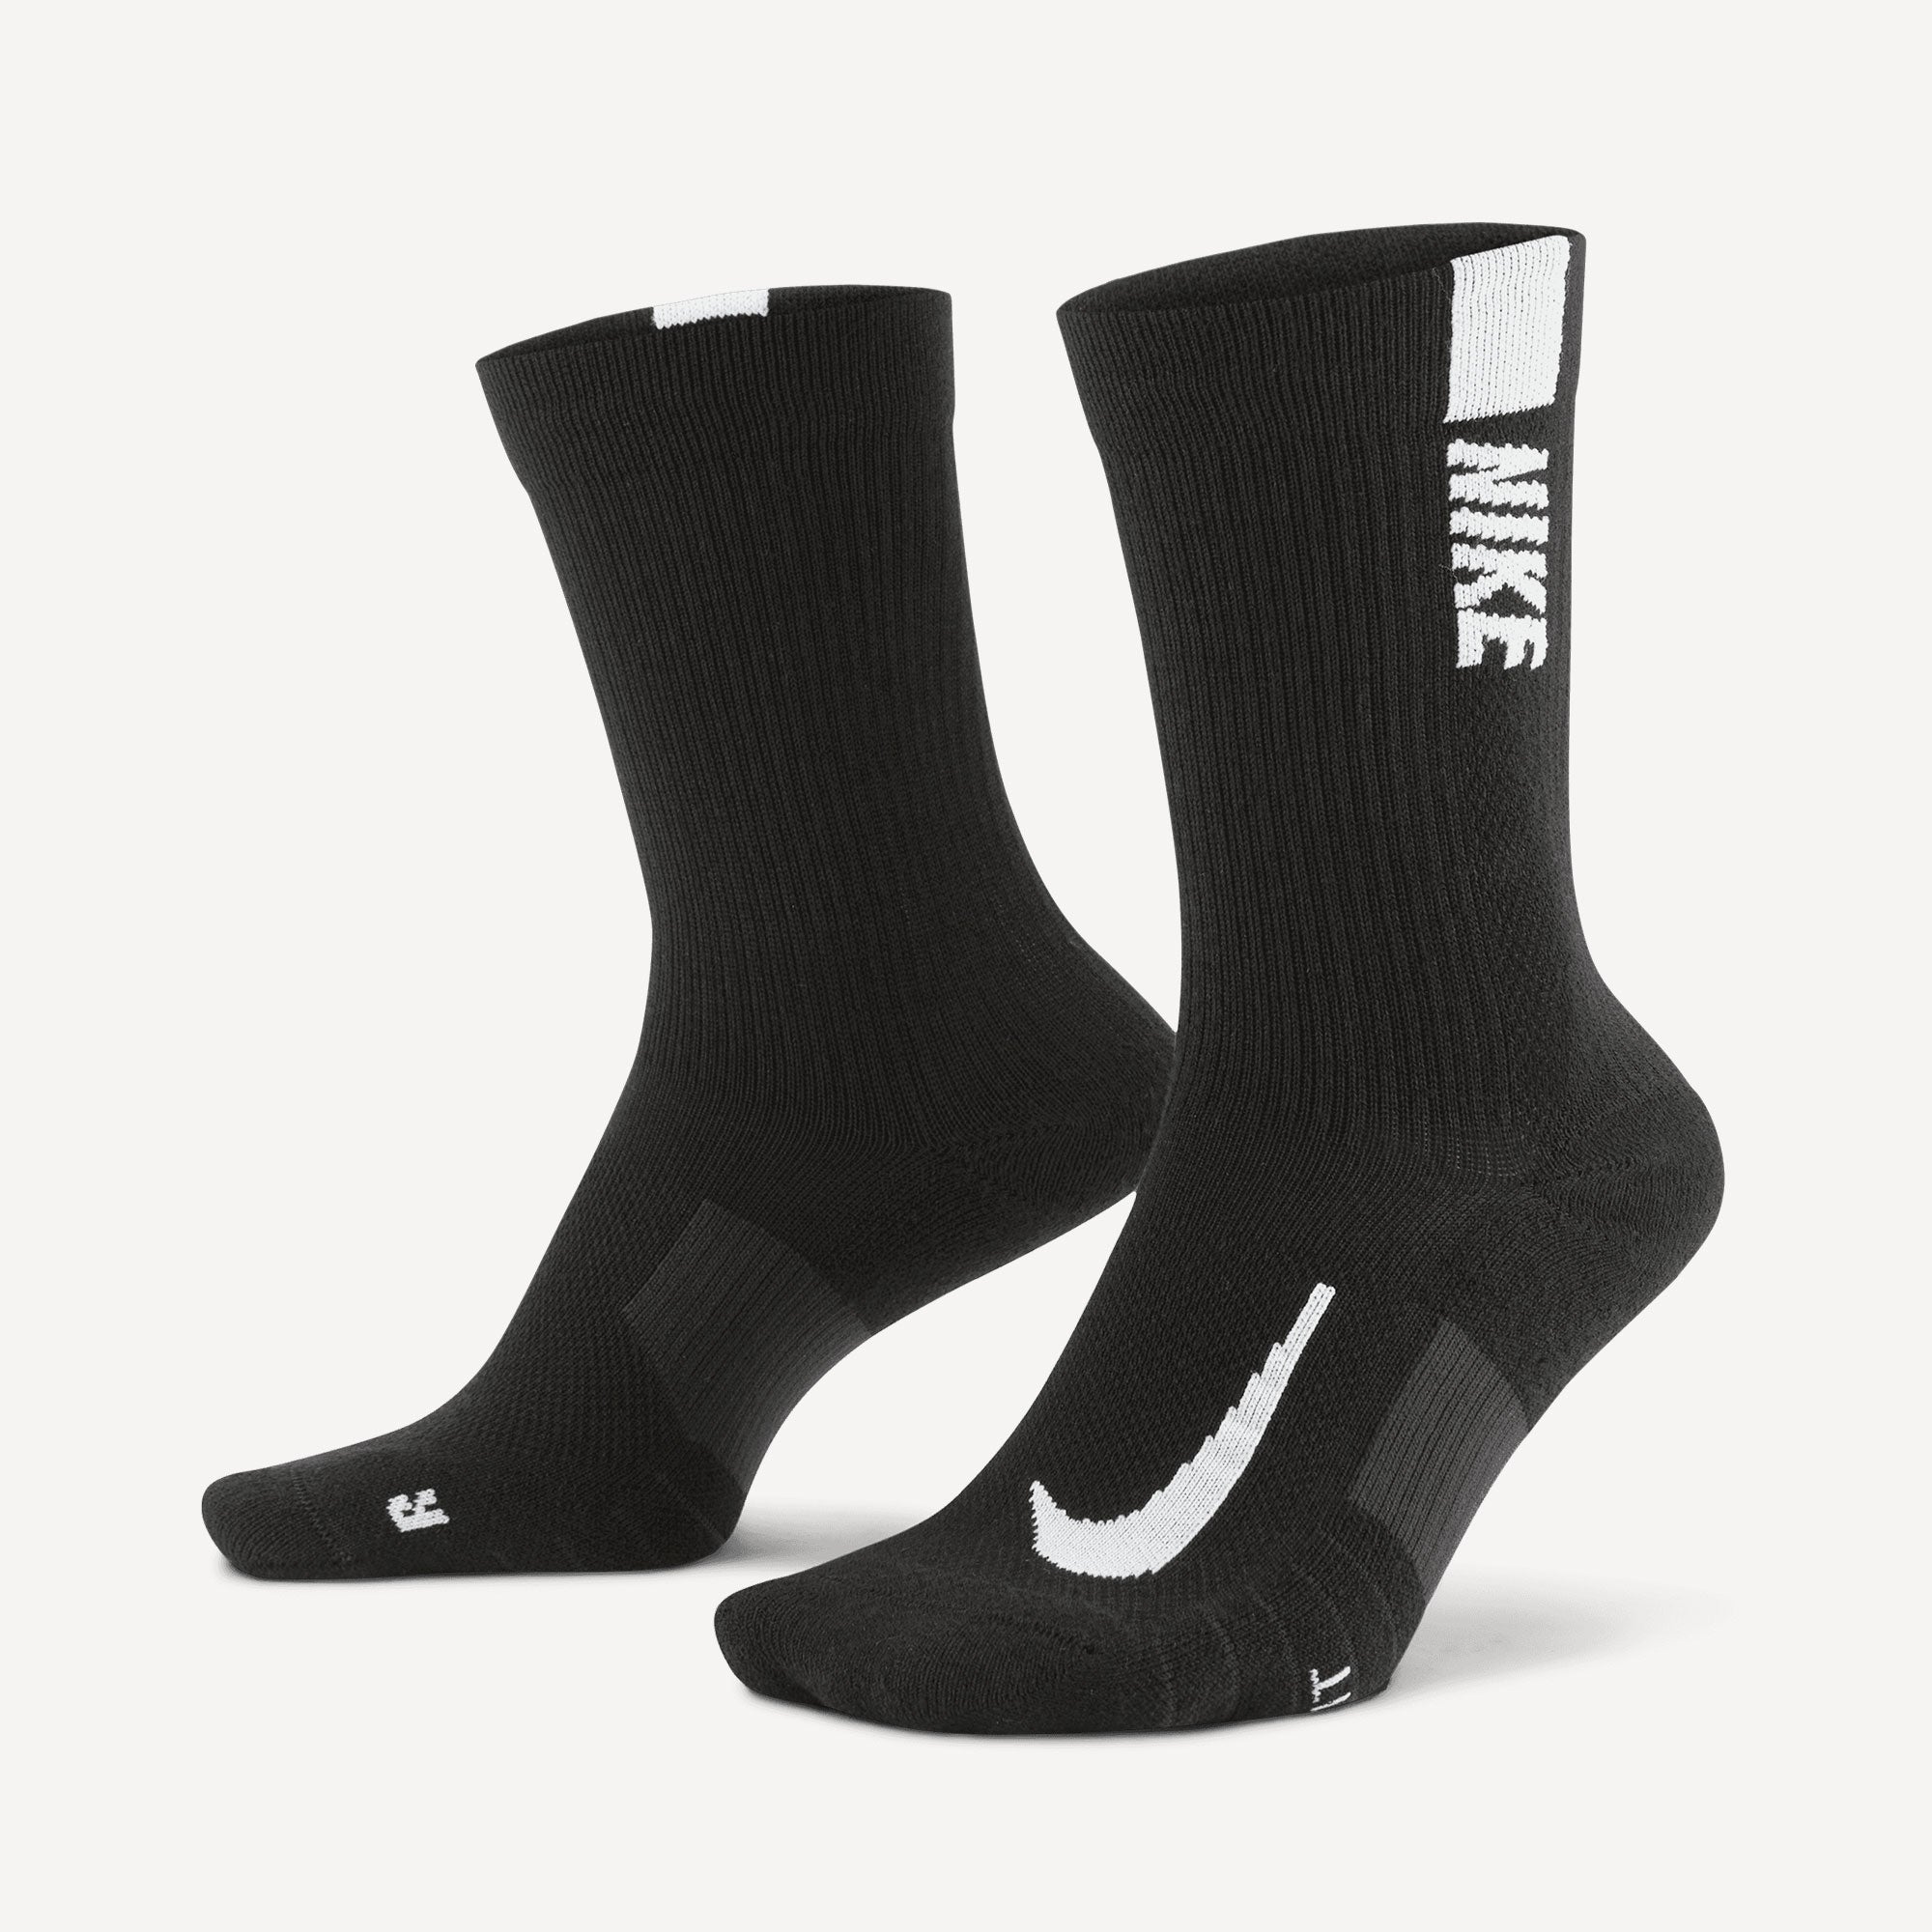 Nike One Women's Dri-FIT Mid-Rise Leggings - Brown